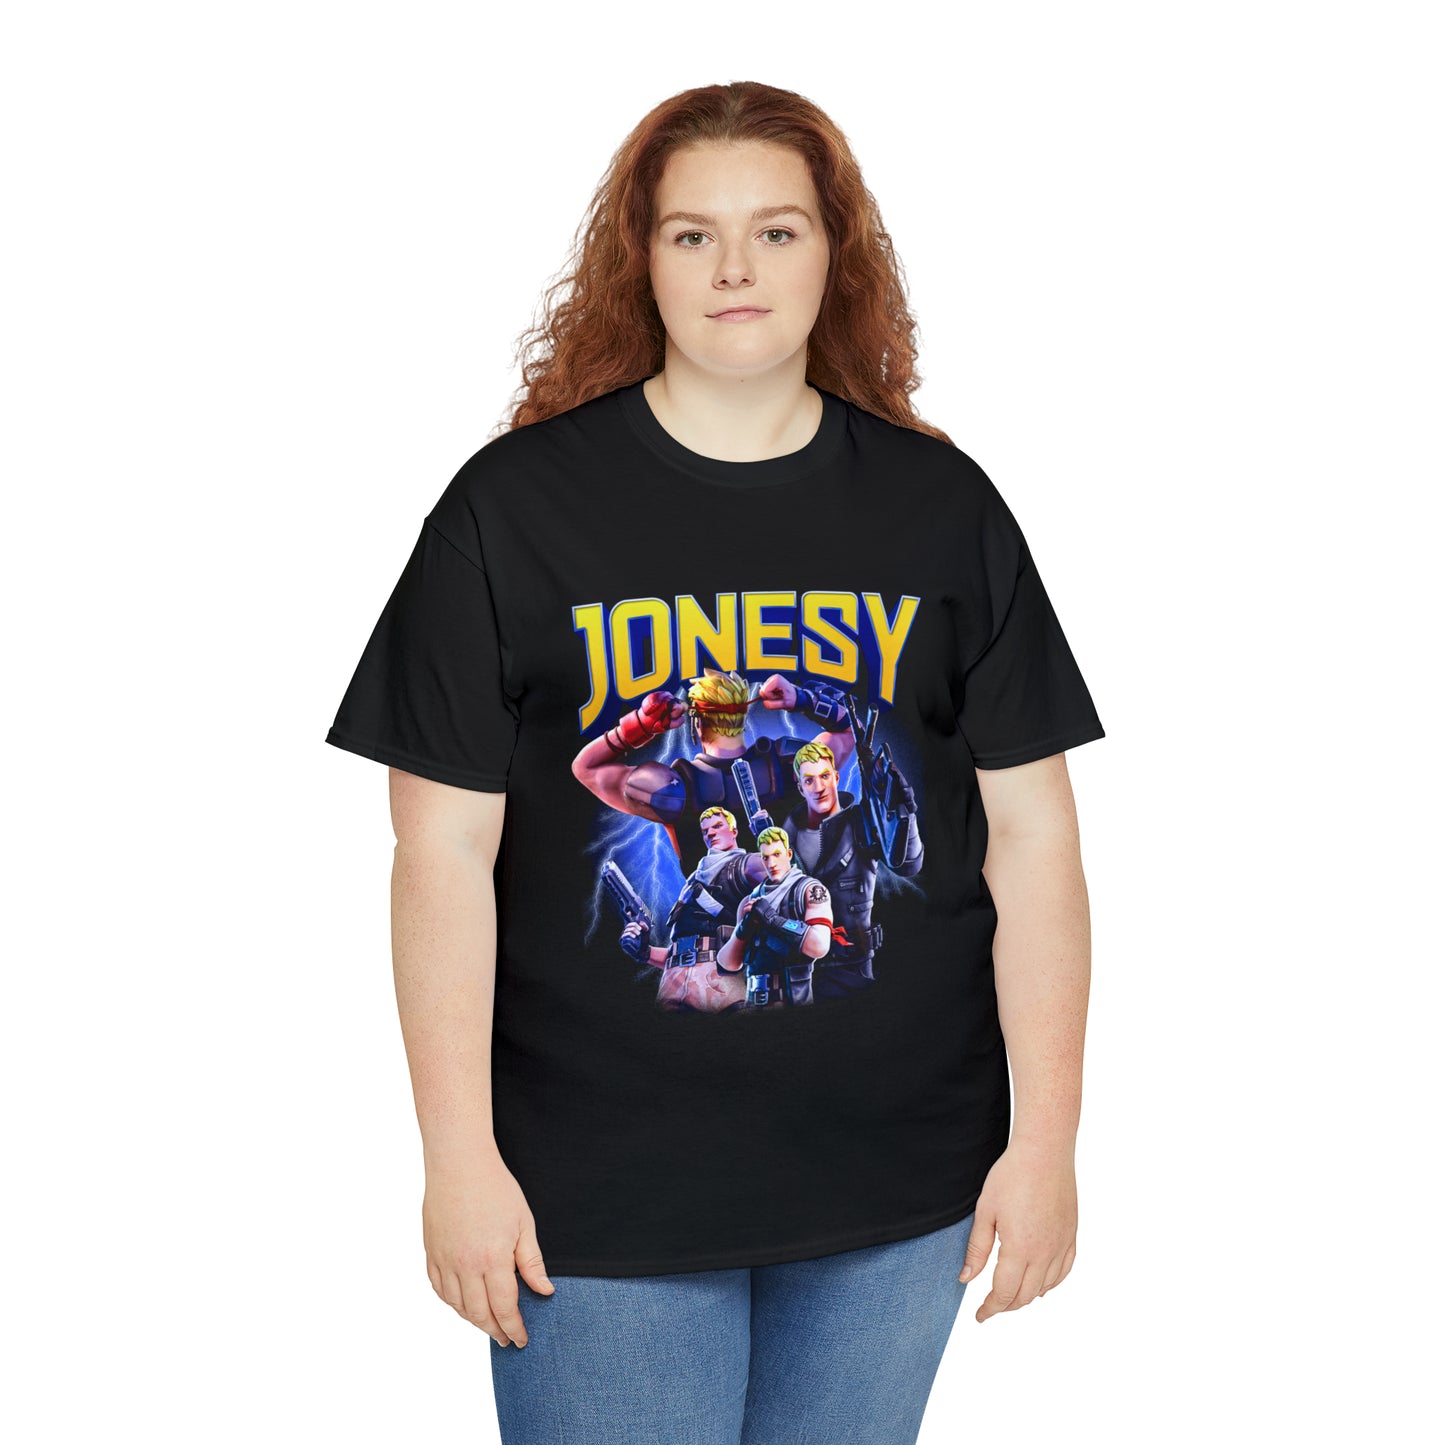 Jonesy T-Shirt!